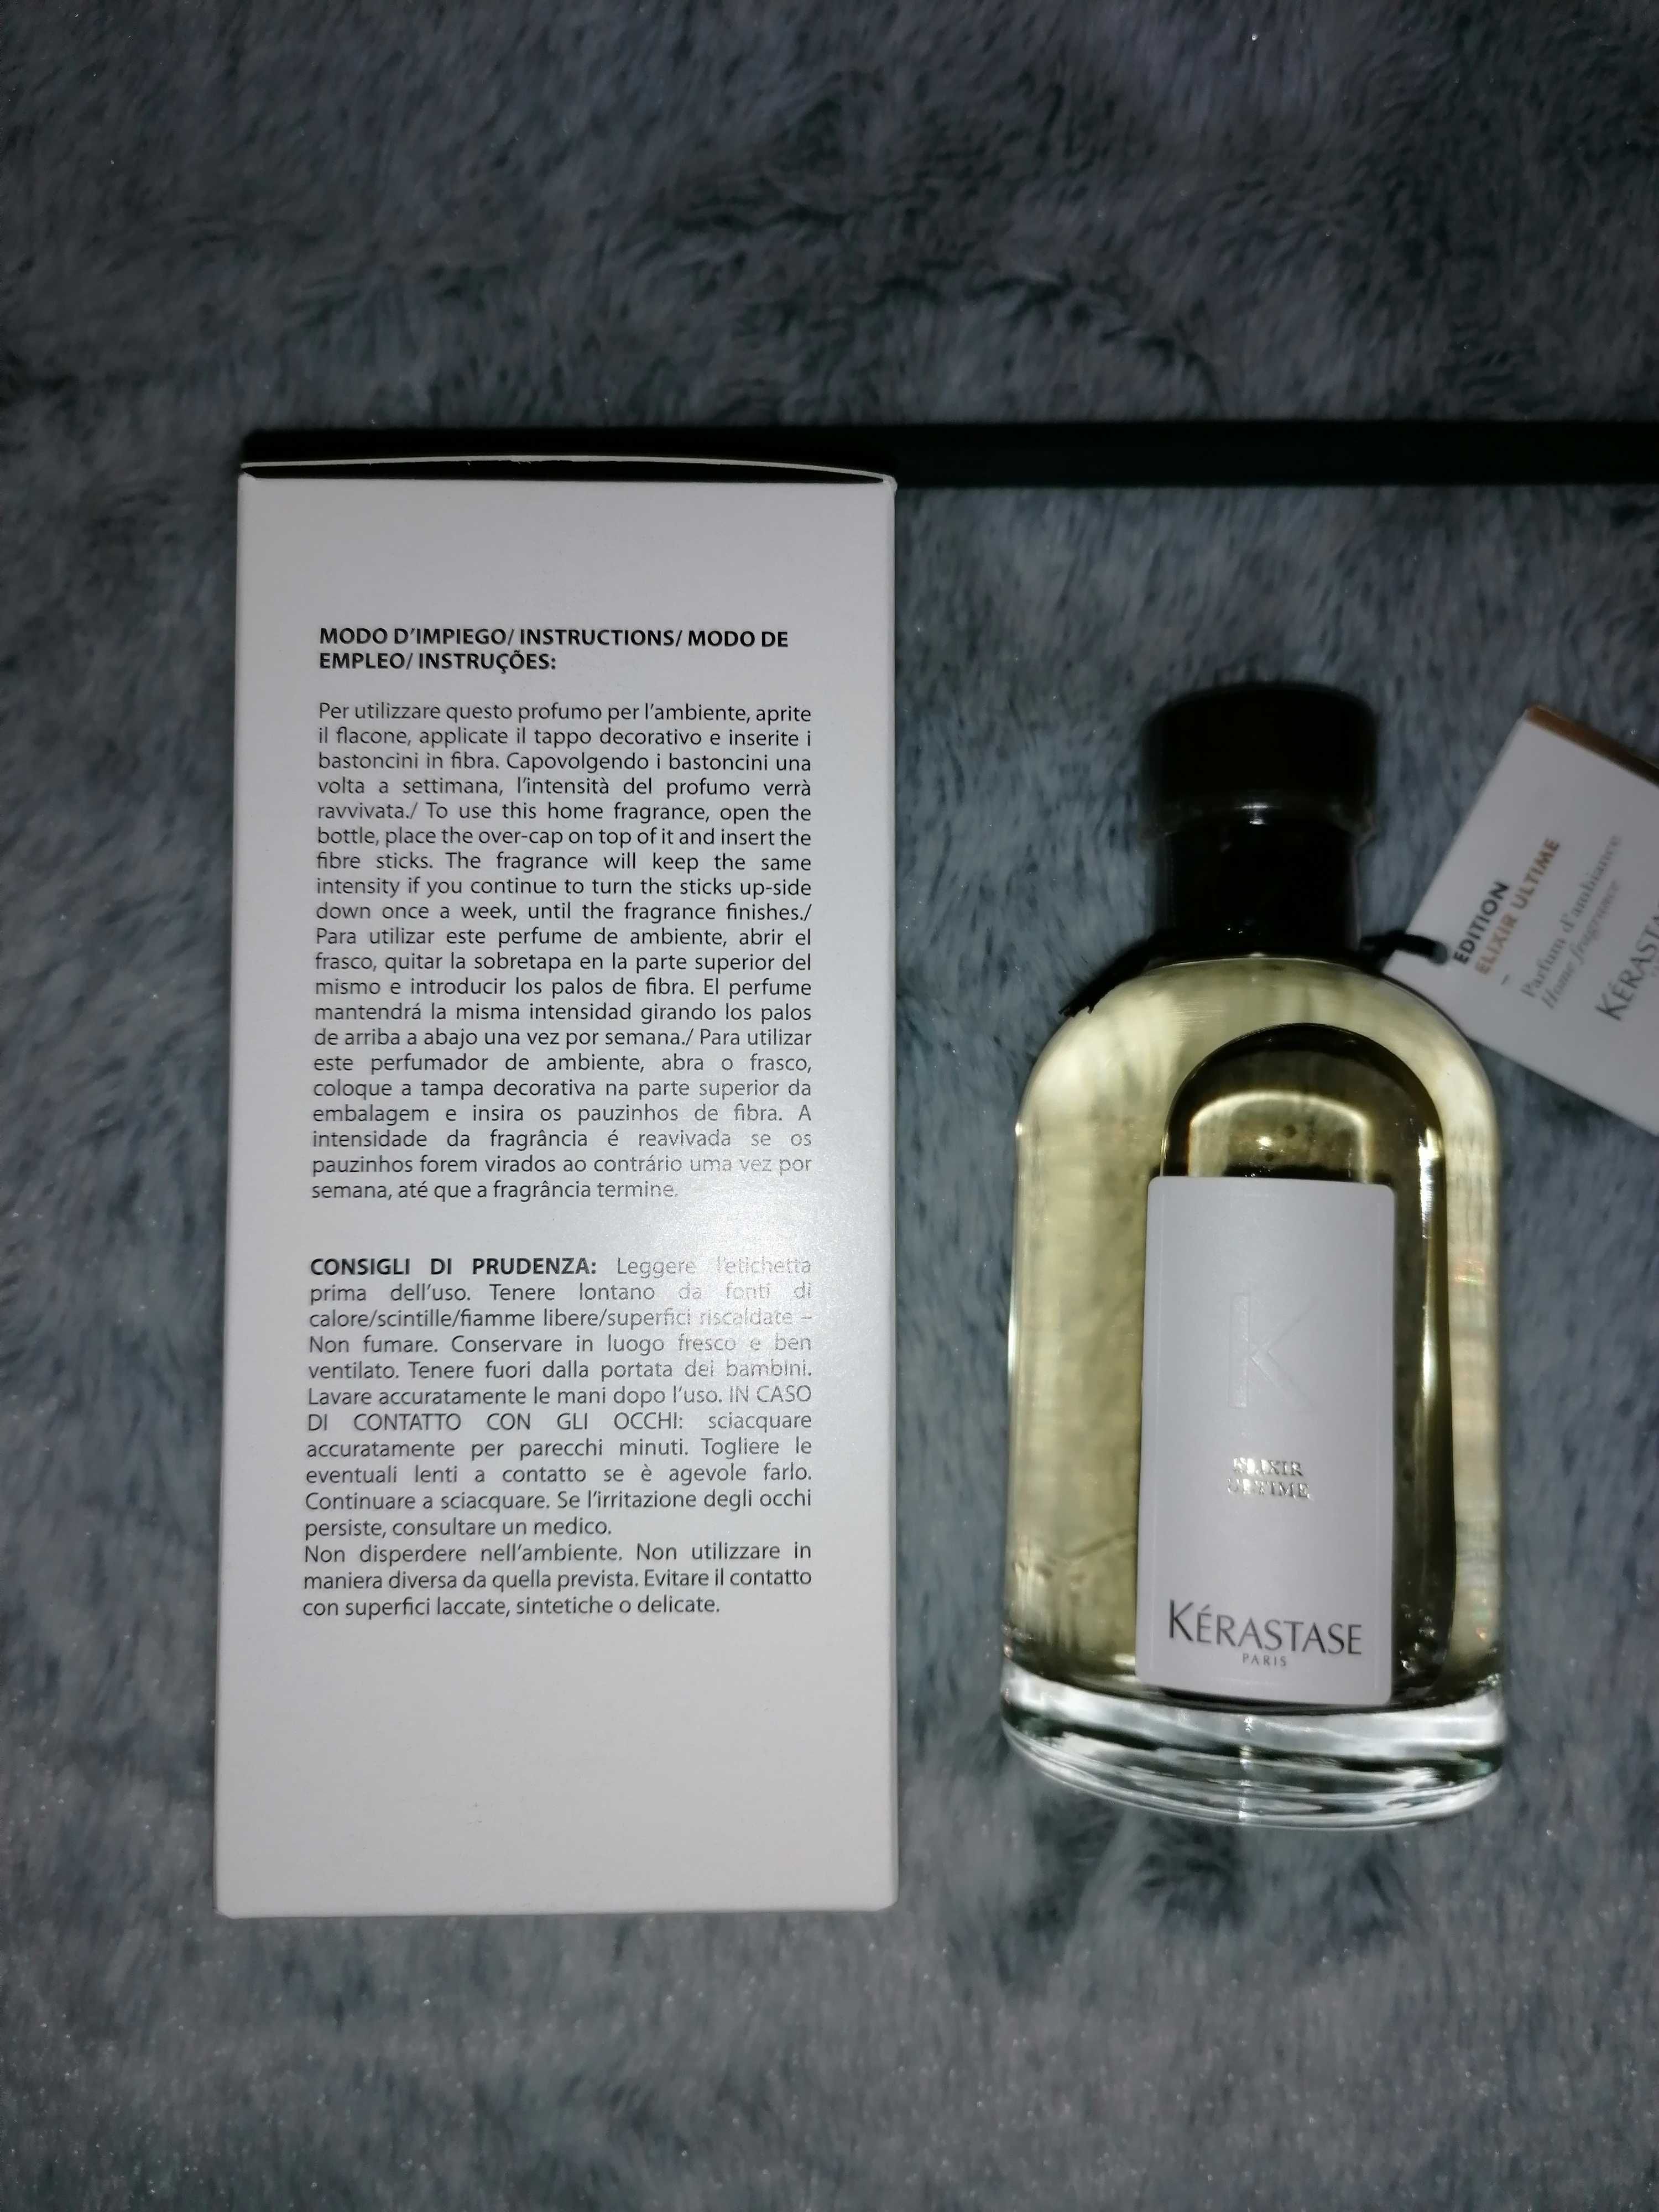 Elixir Ultime parfum d'ambiance home fragrance Kérastase Paris 200ml